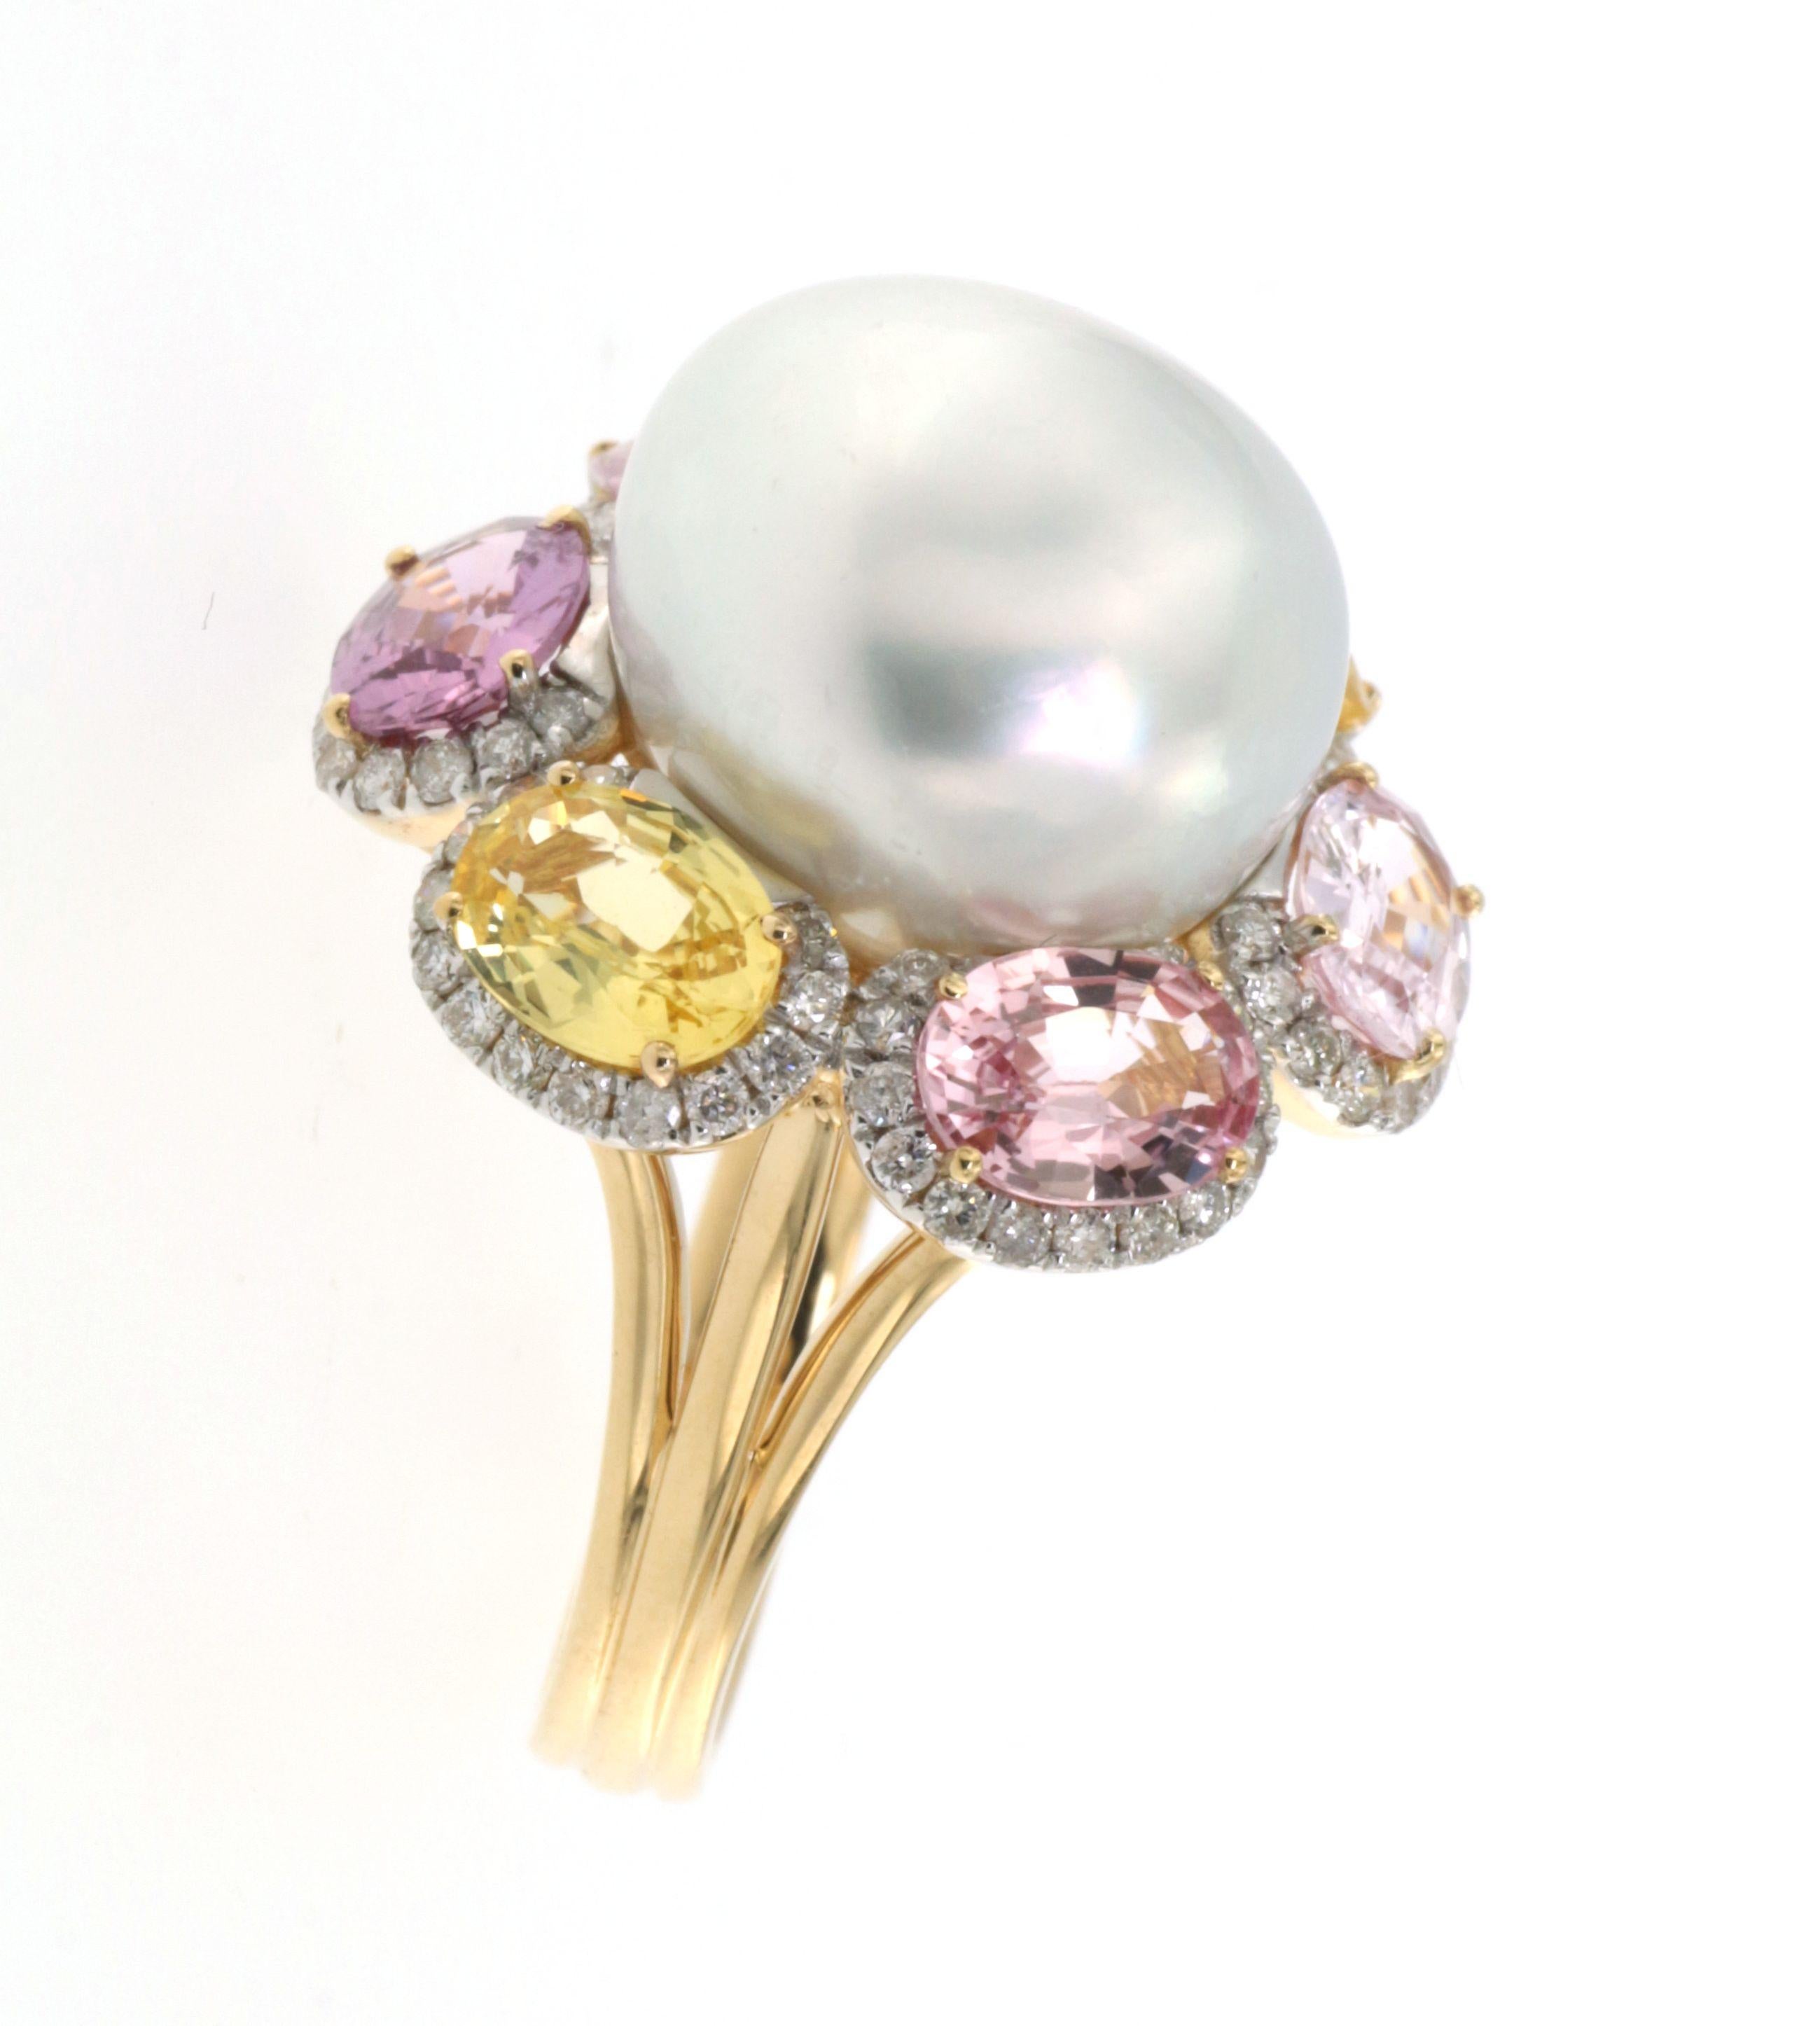 mutli-coloured pearl ring